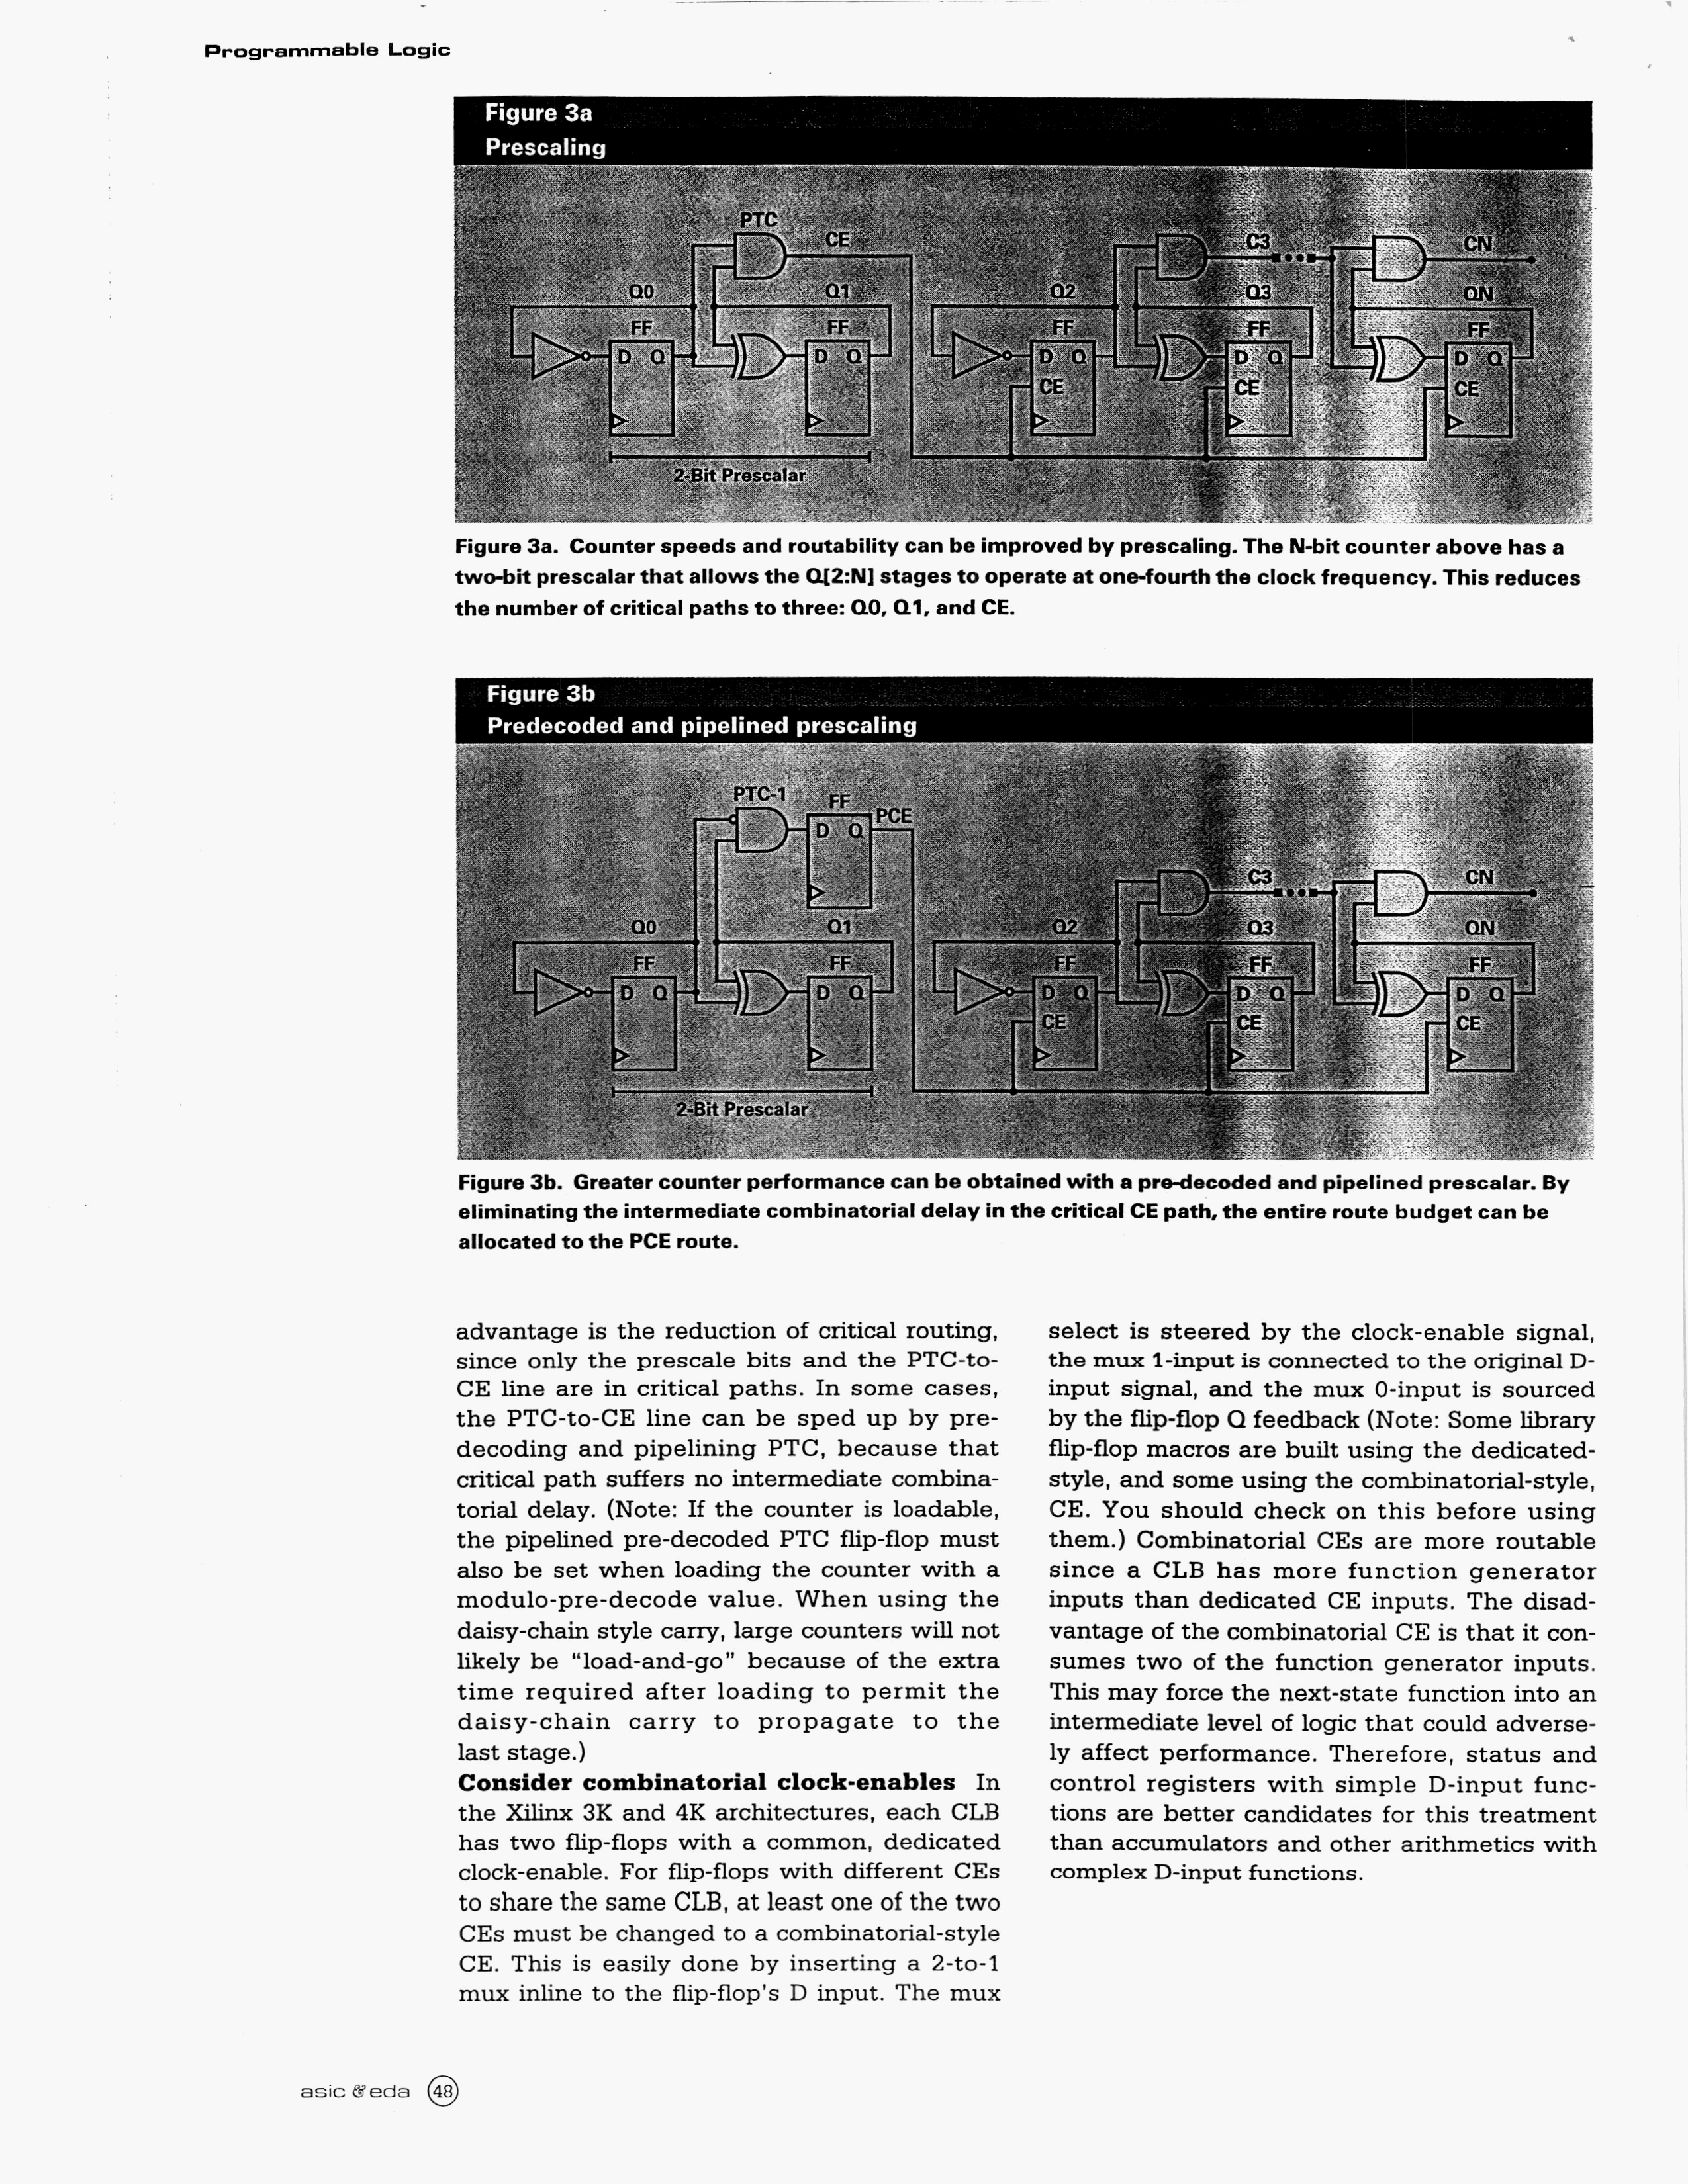 * Design Tips for High-Performance FPGA Design, Stephen Wasson, October 1994, ASIC & EDA page 4 *